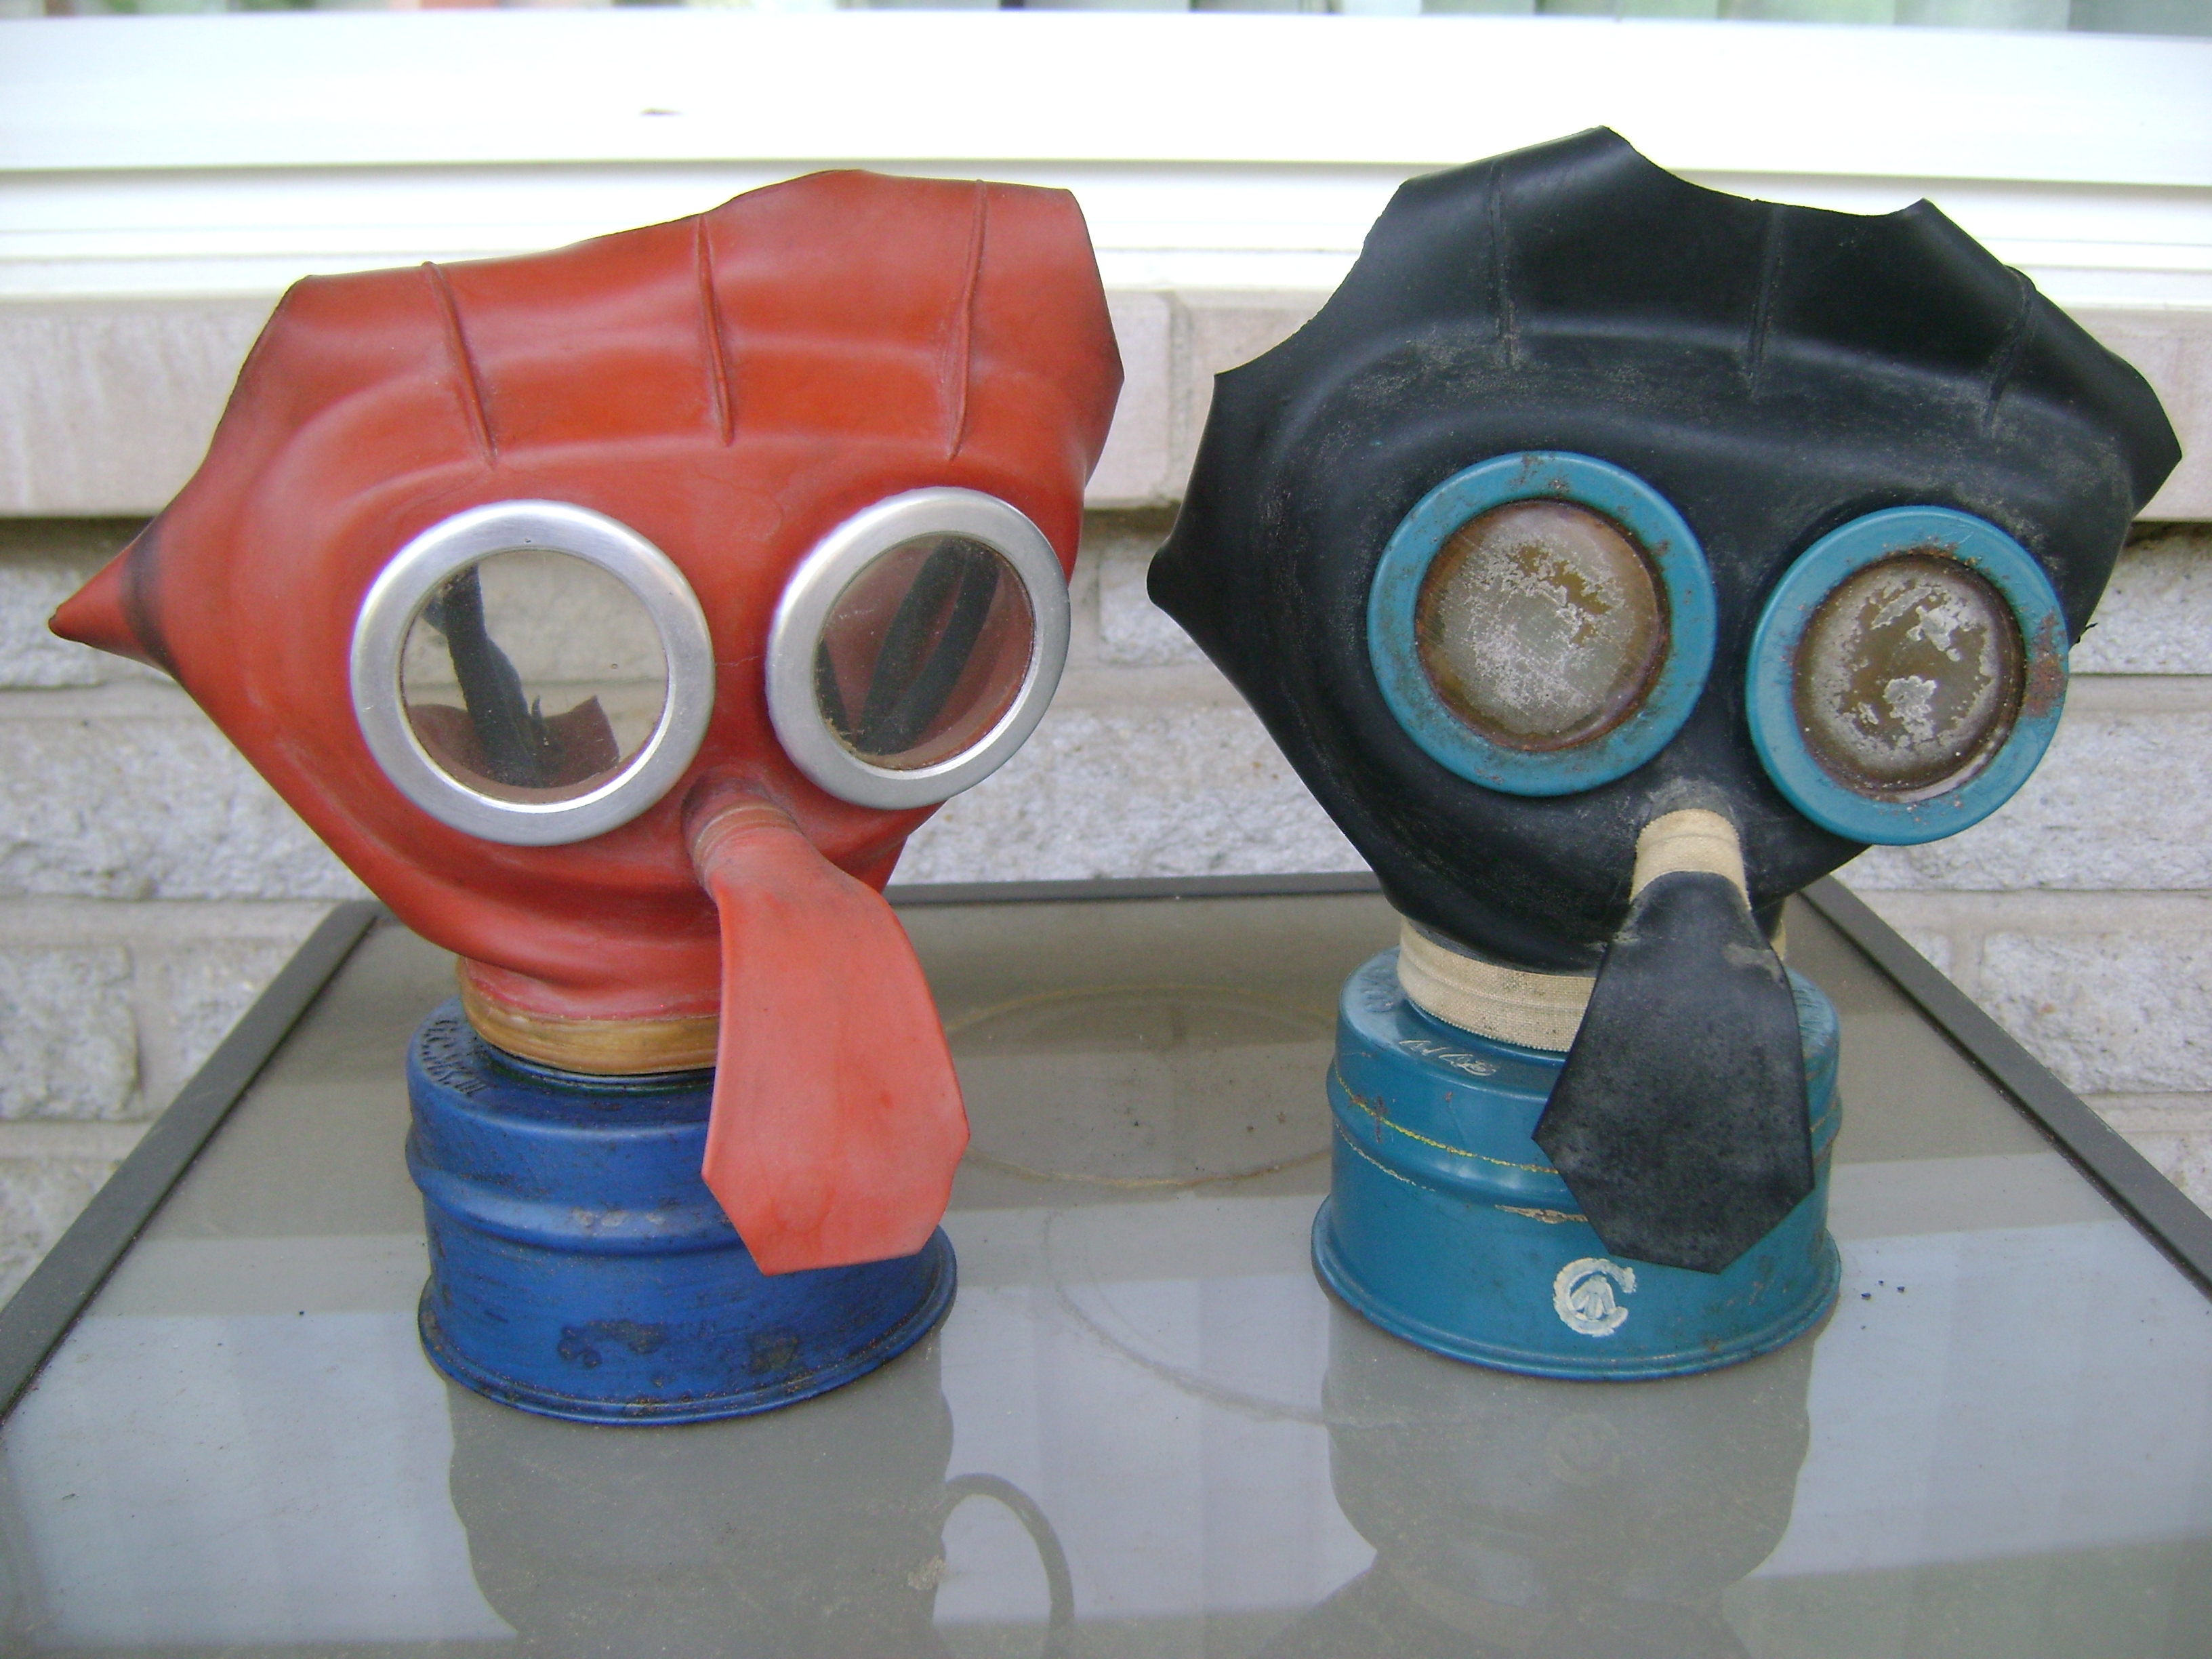 mickey mouse gas mask box